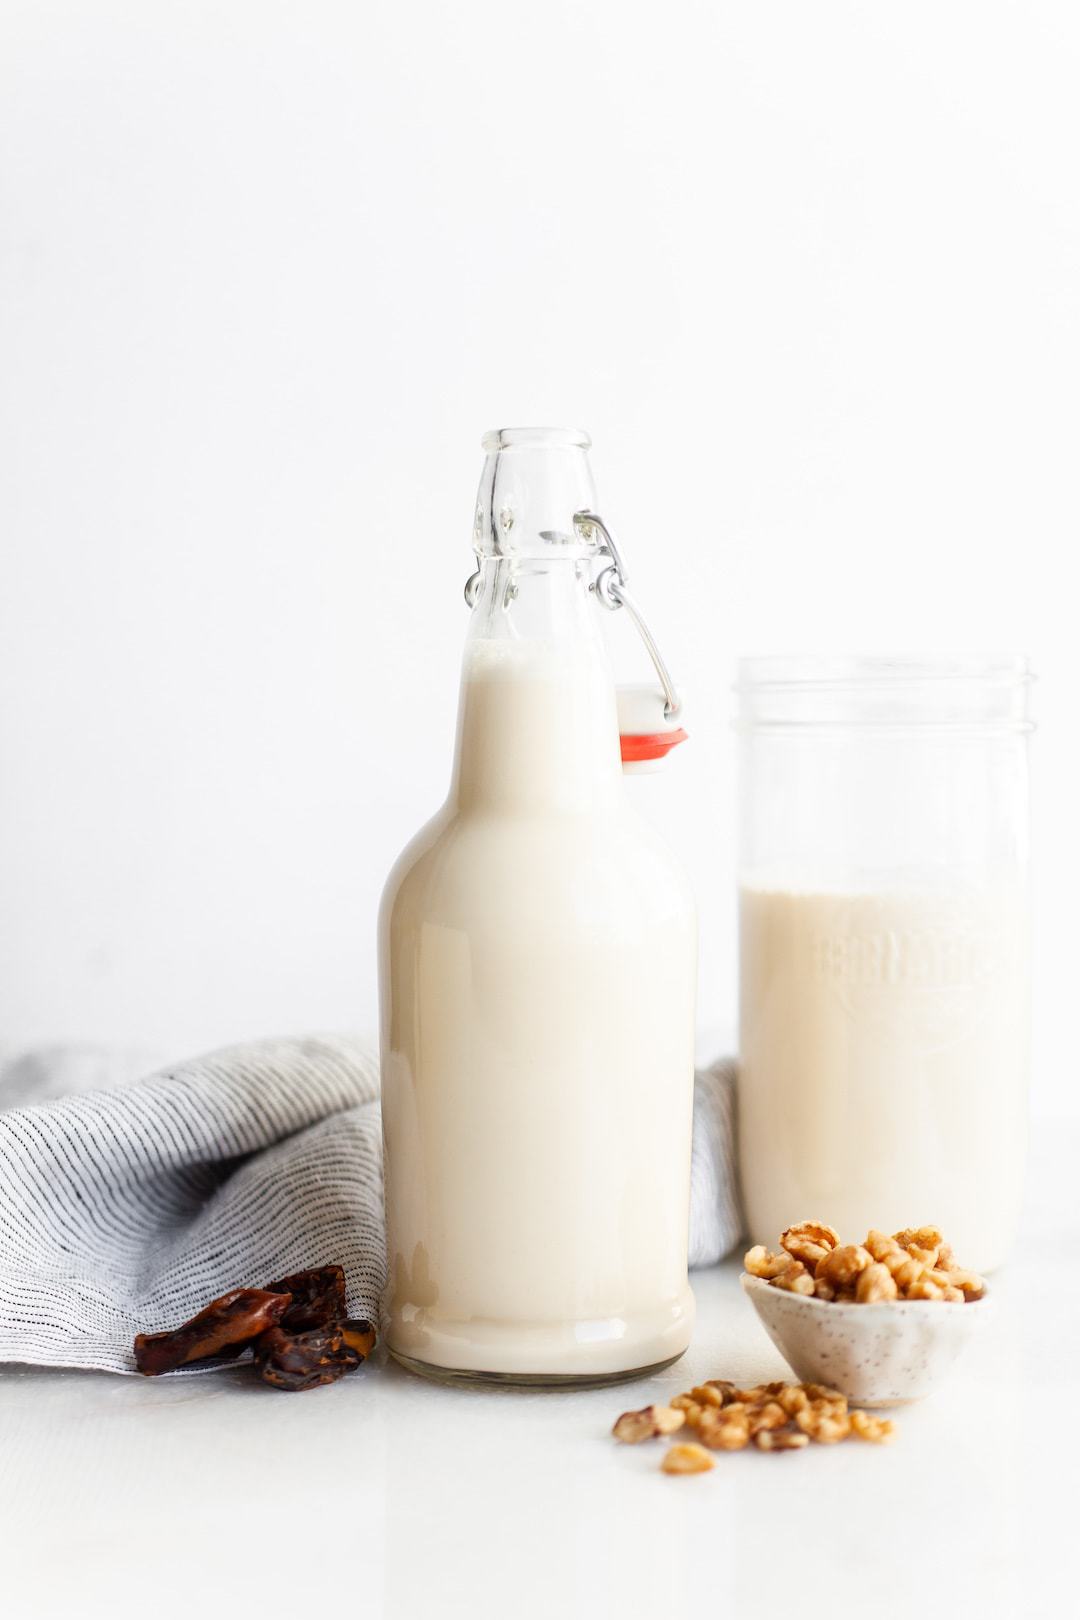 Made in 10 Minutes - The Easiest Vitamix Walnut Milk (2 Ways!)